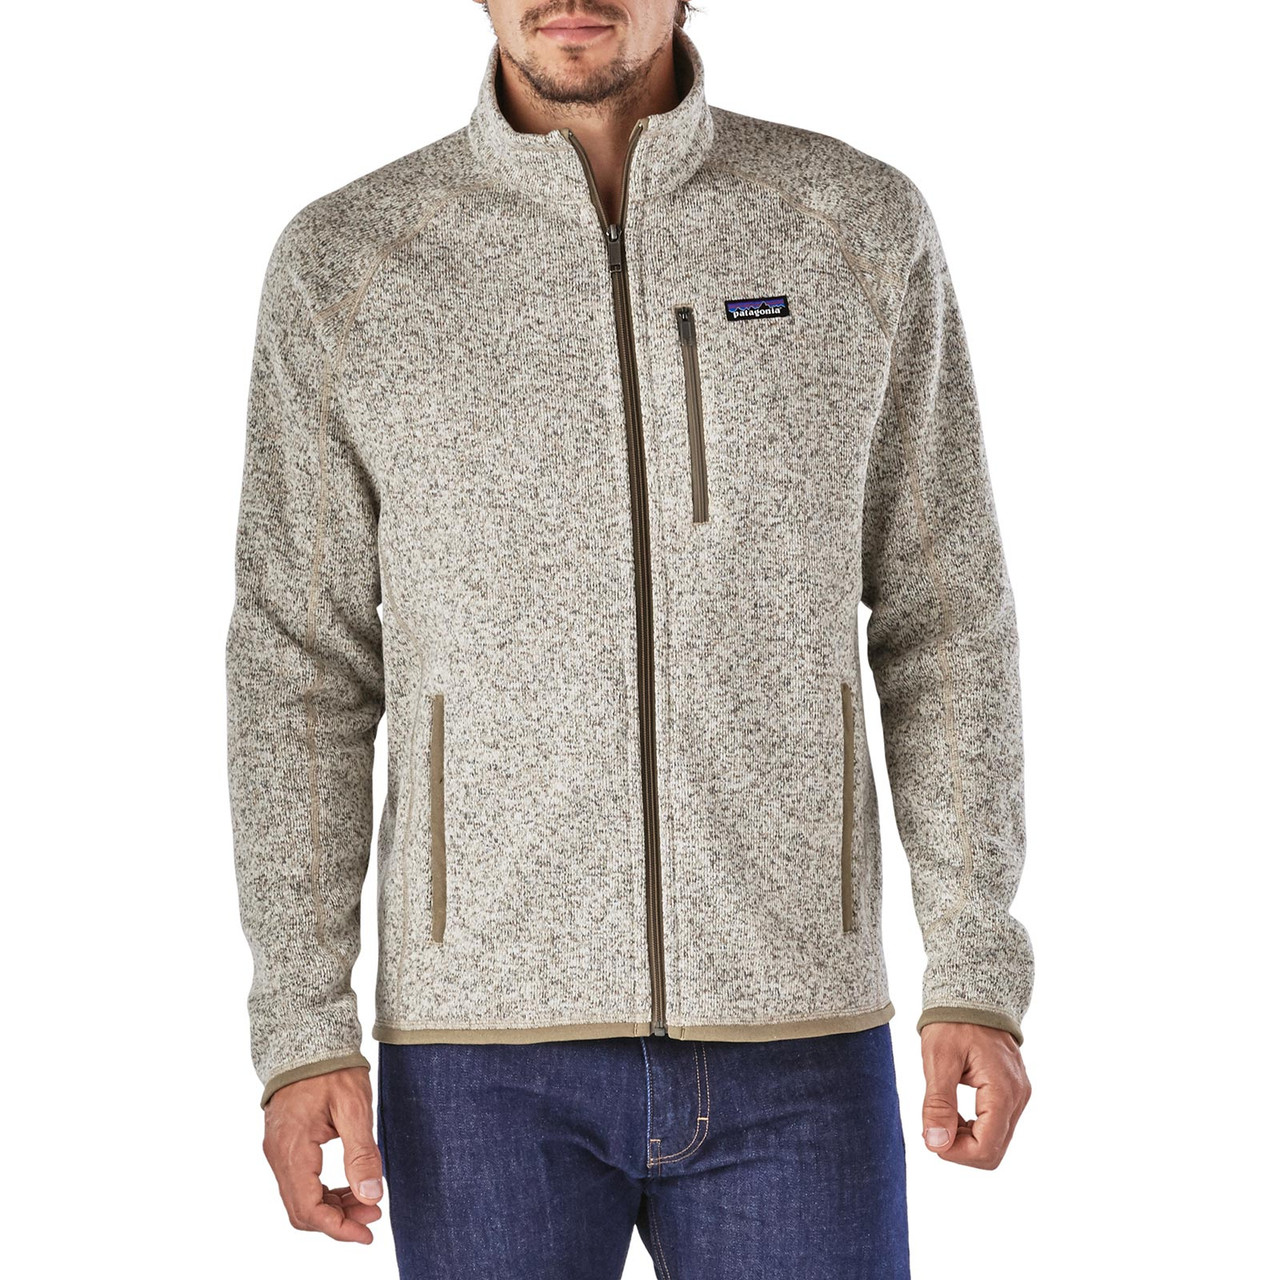 Patagonia Men's Better Sweater Jacket - AvidMax